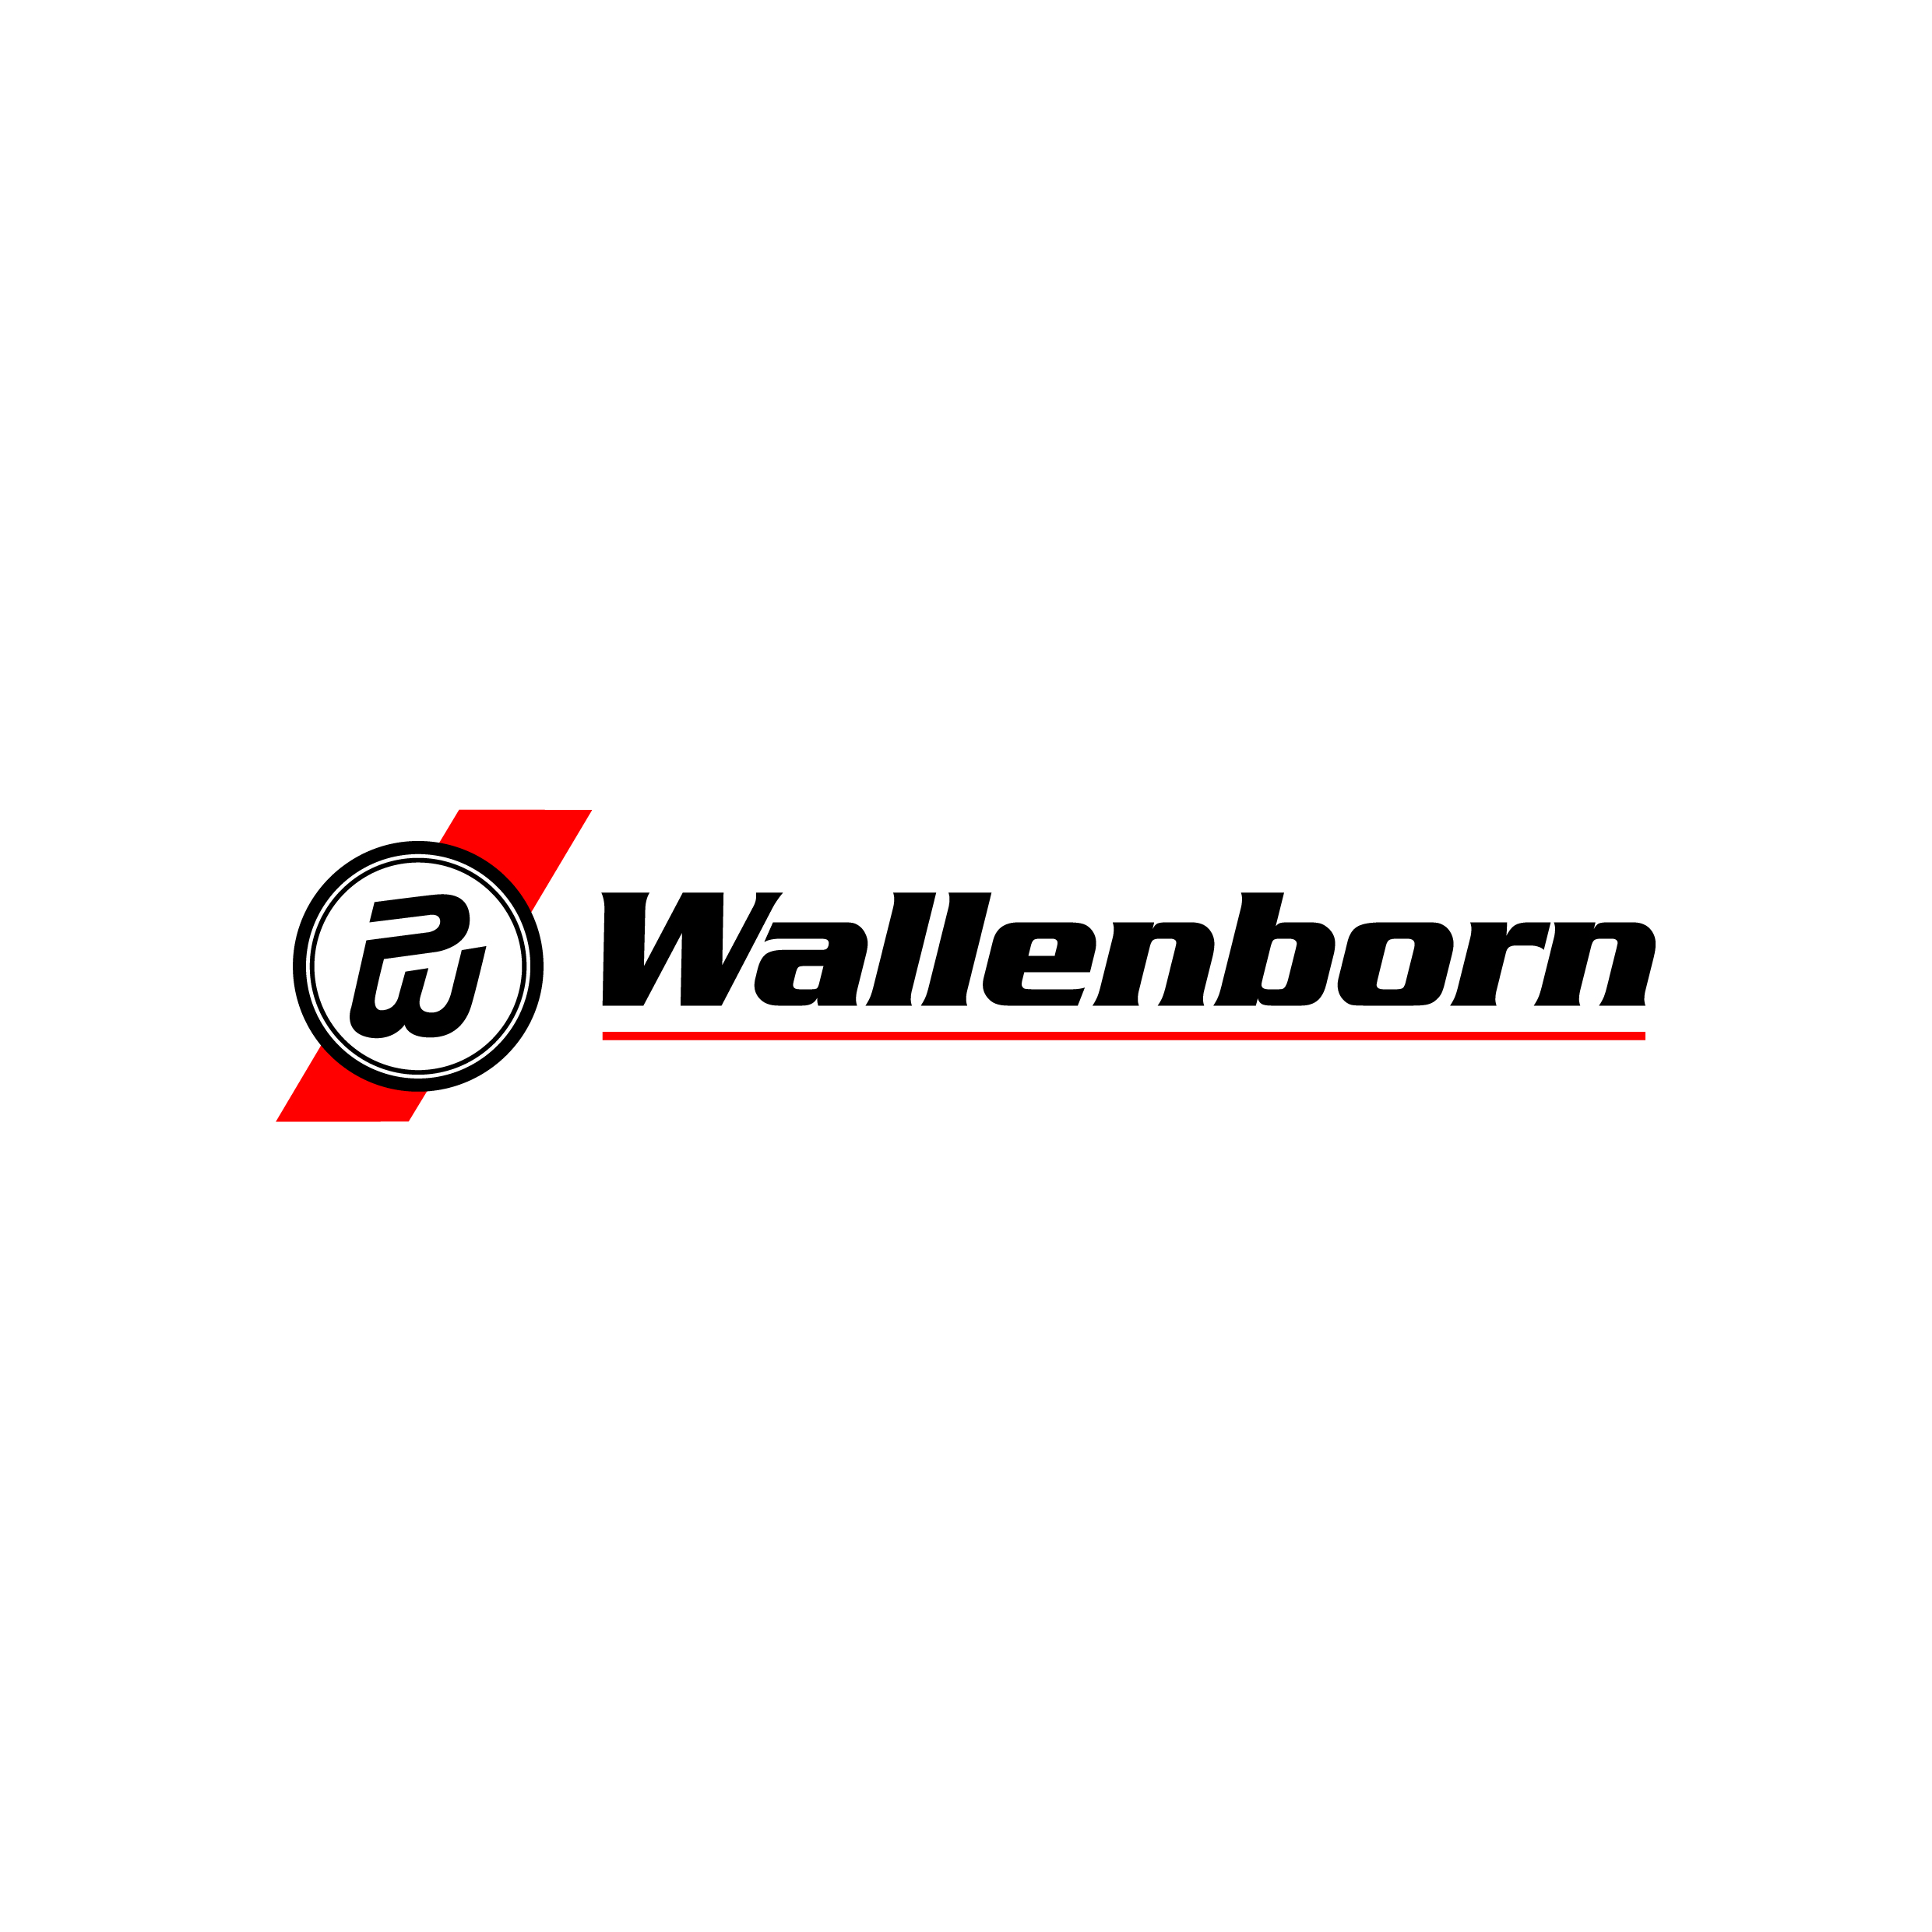 Wallenborn Transports S.A